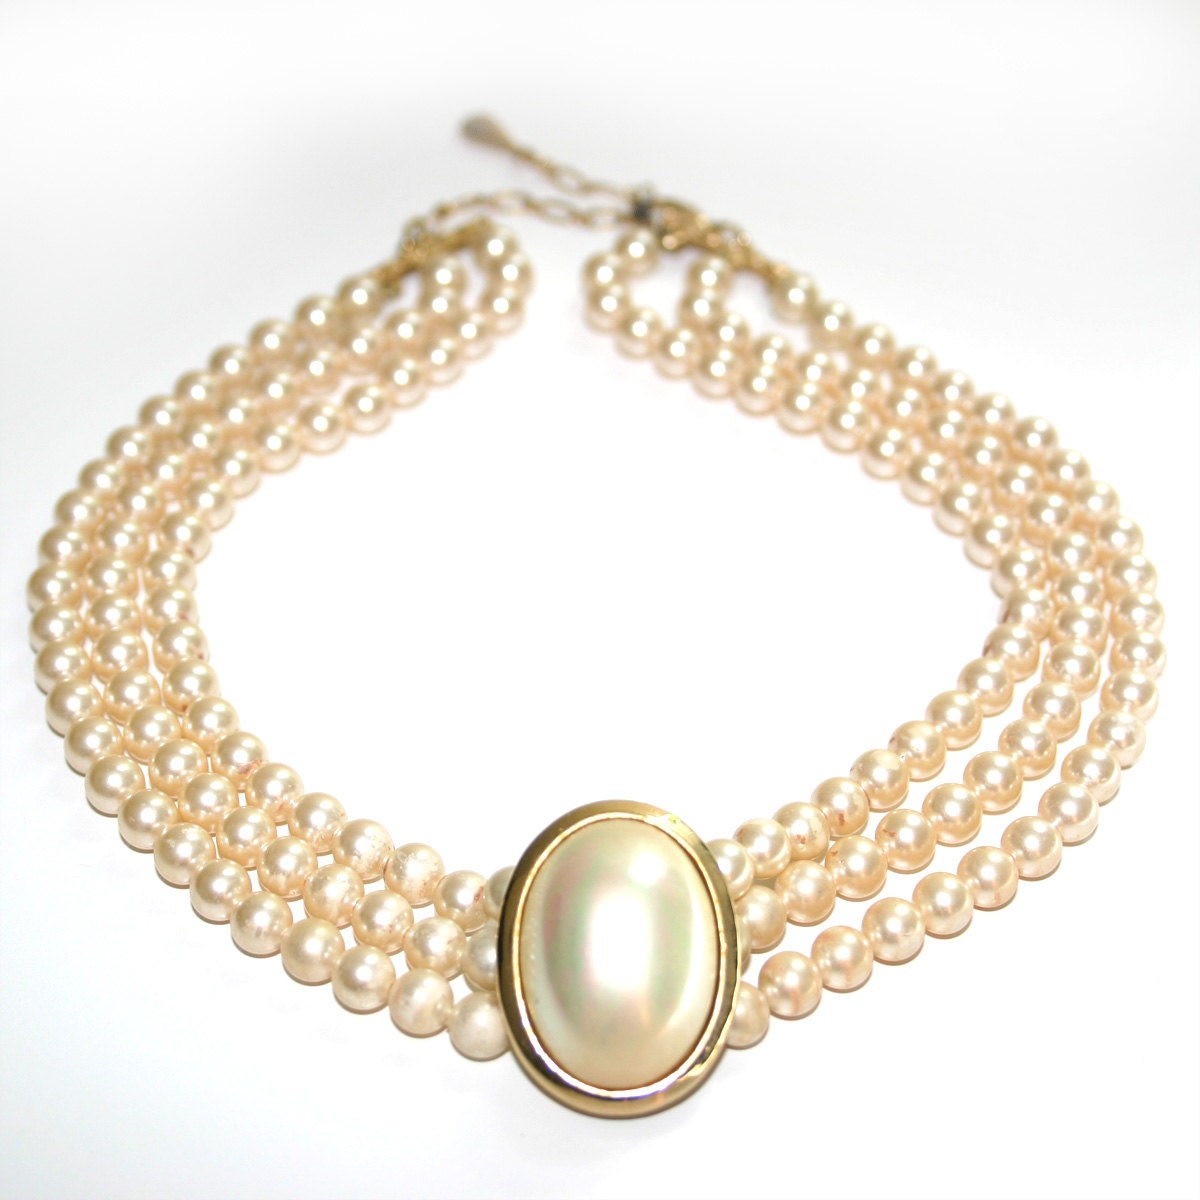 1950s Pearl Choker Necklace By Houseofhavisham On Etsy